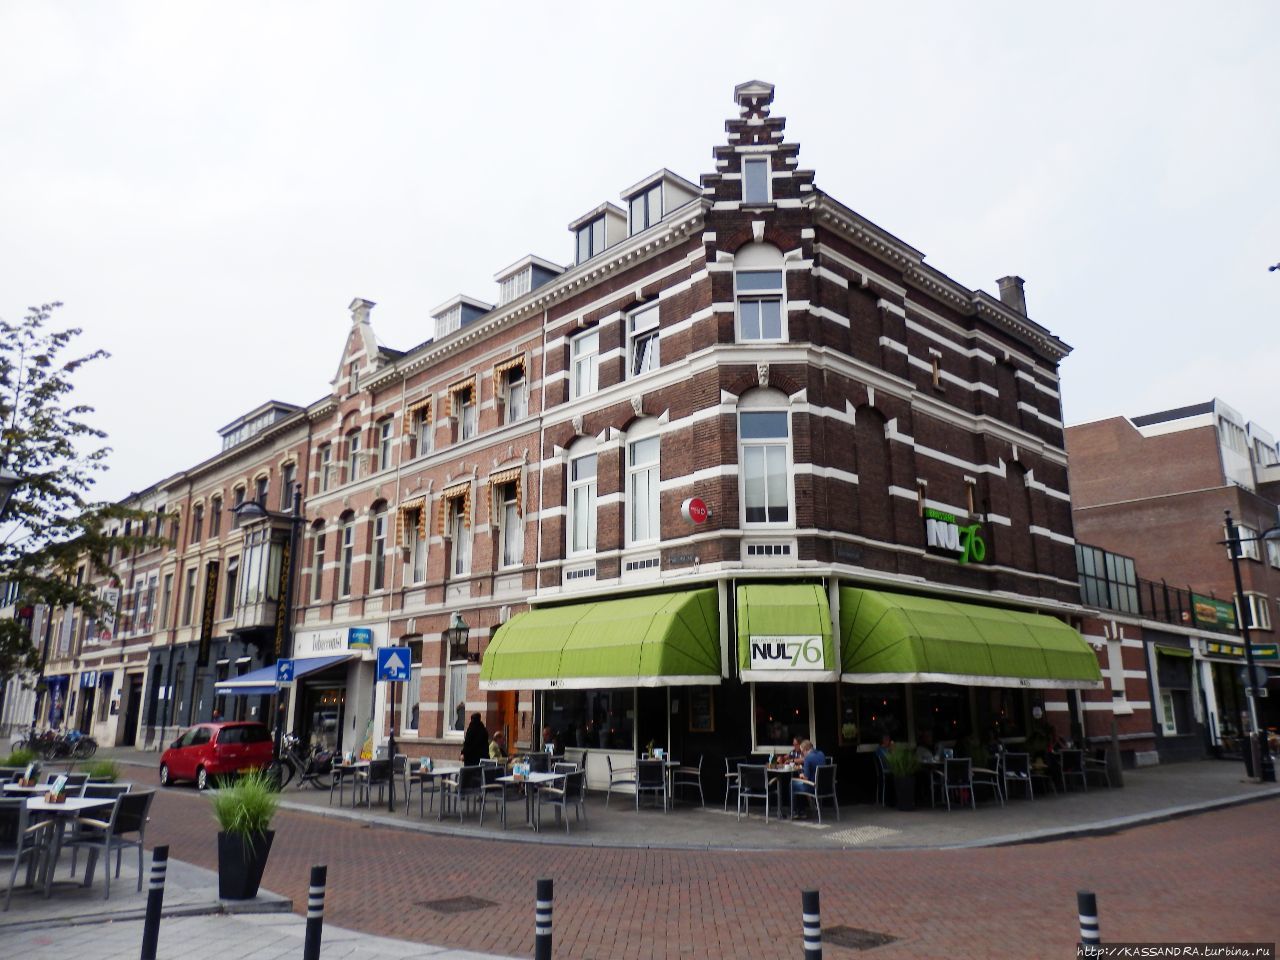 Бреда. Туристическая улица Виллемстраат Бреда, Нидерланды